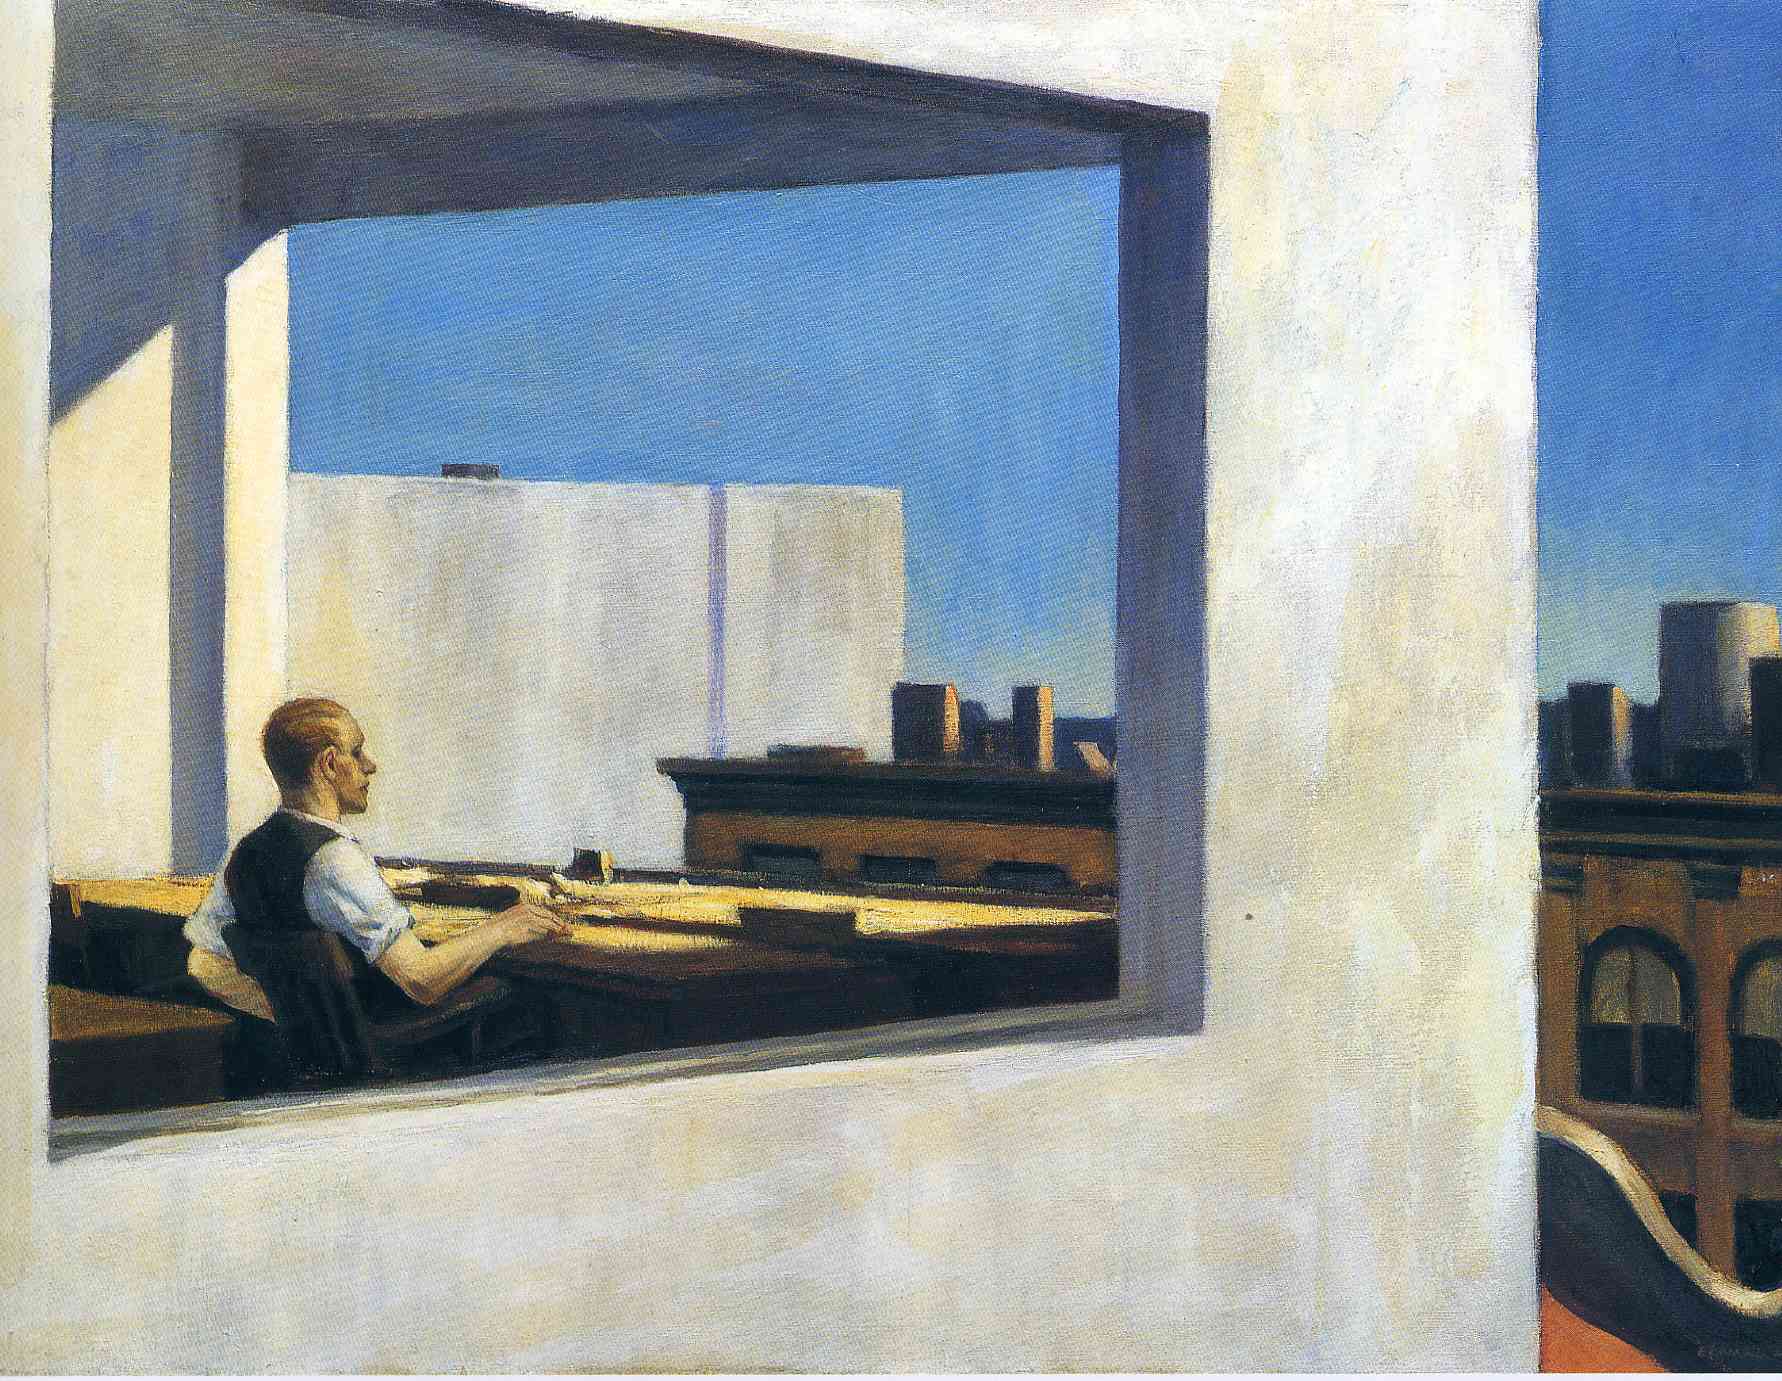 Офис в маленьком городе (Office in a Small City) by Edward Hopper - 1953 - 71.1 x 101.6 см 